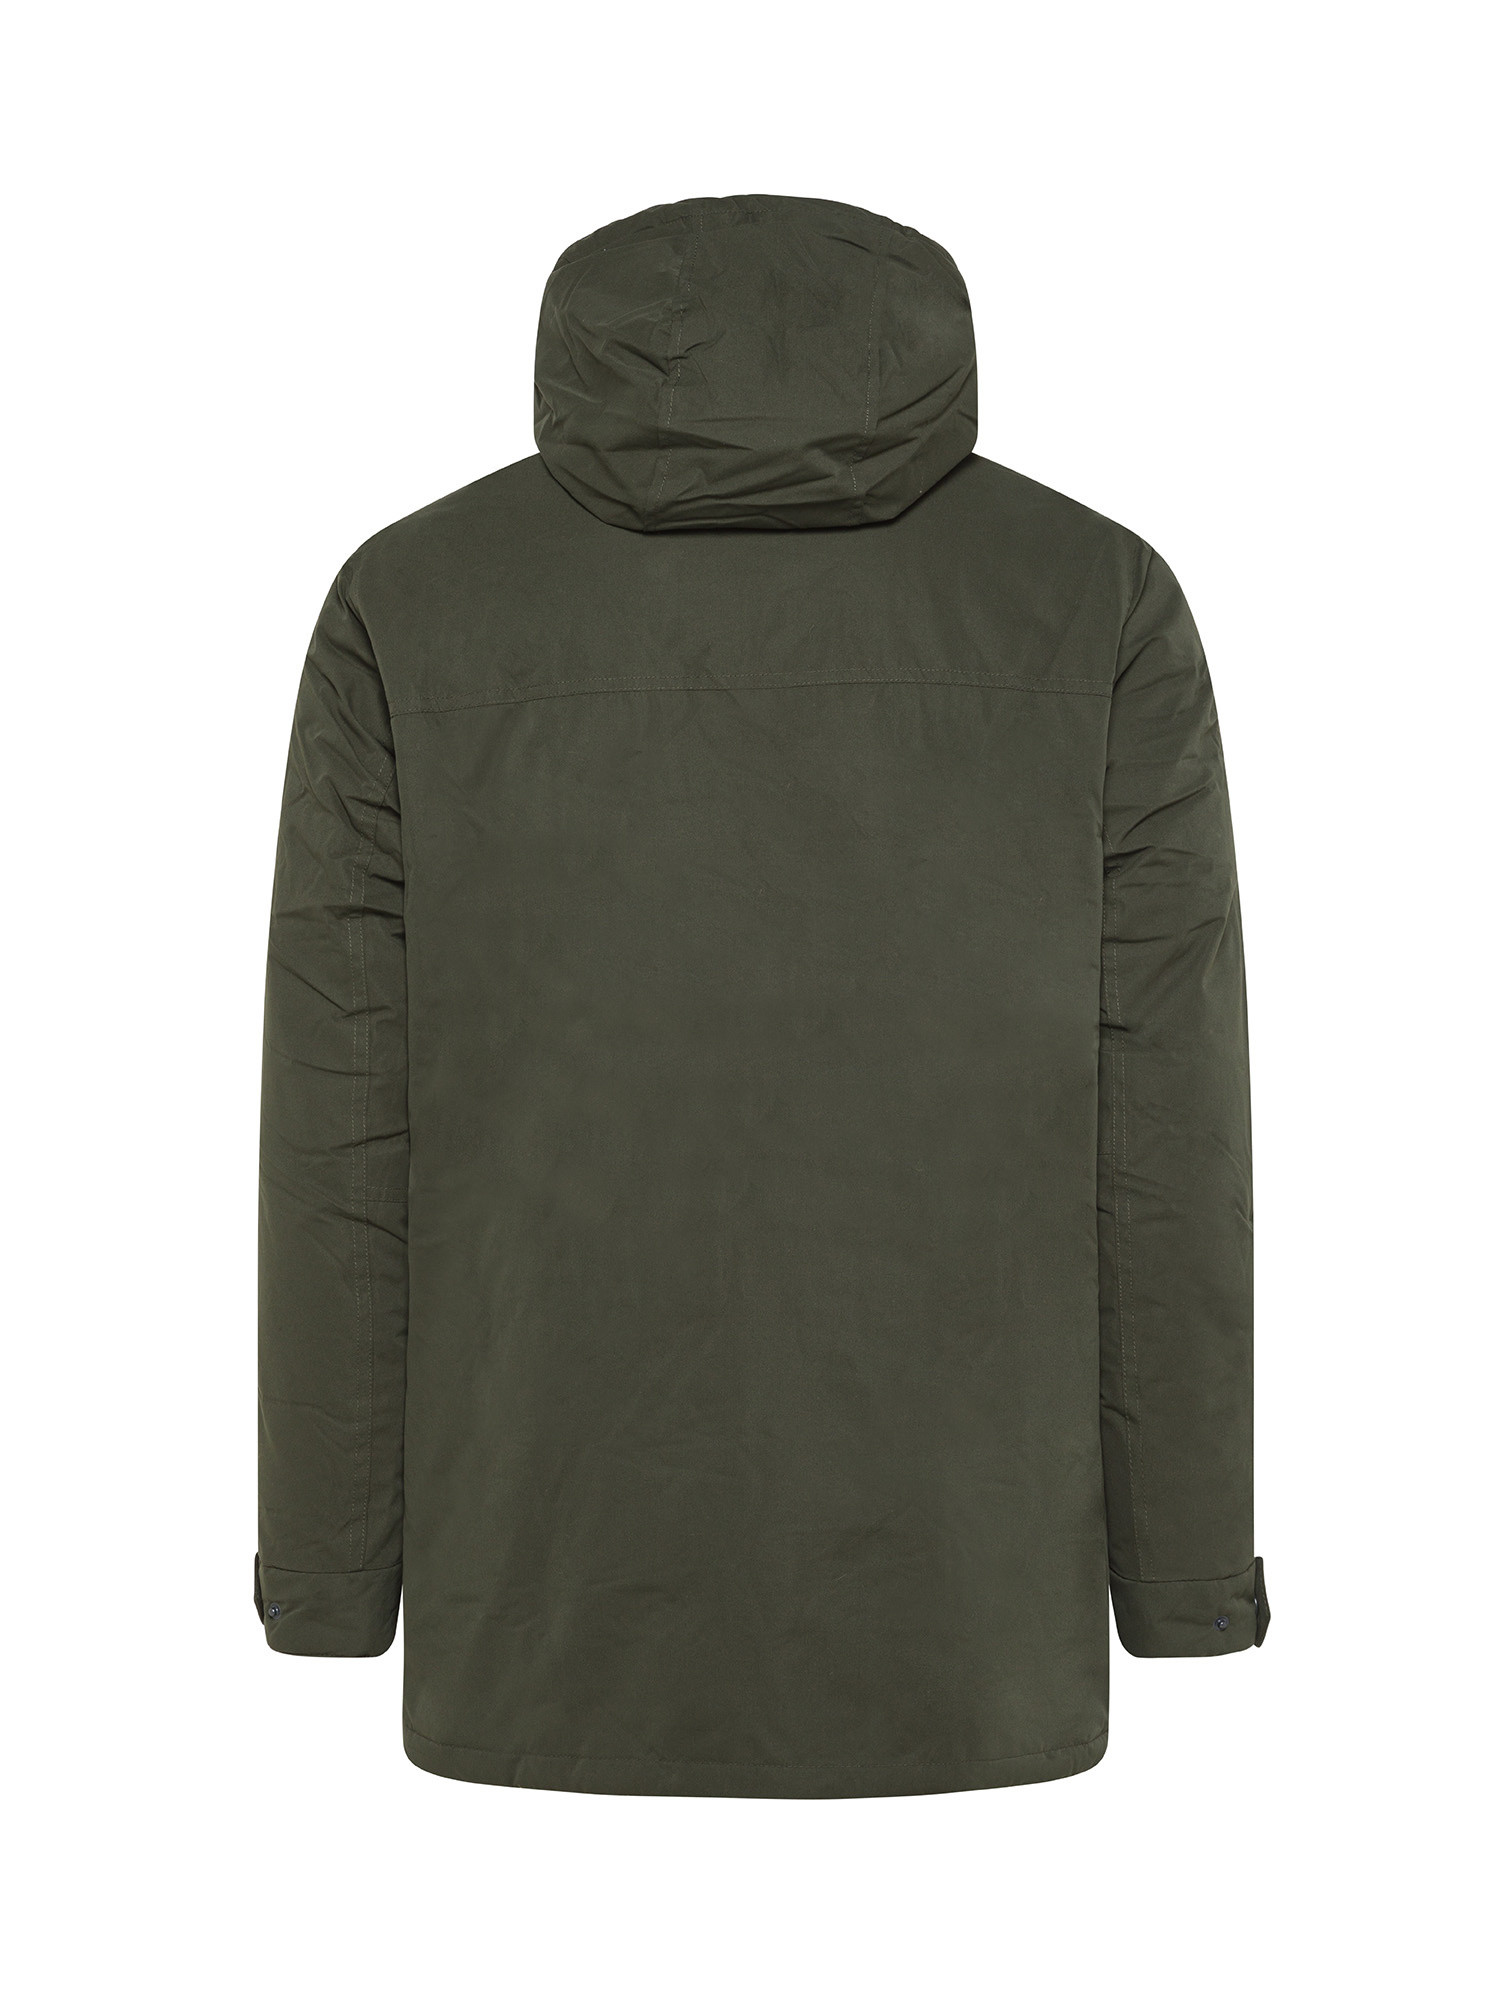 Jacket with adjustable hood, Dark Green, large image number 1